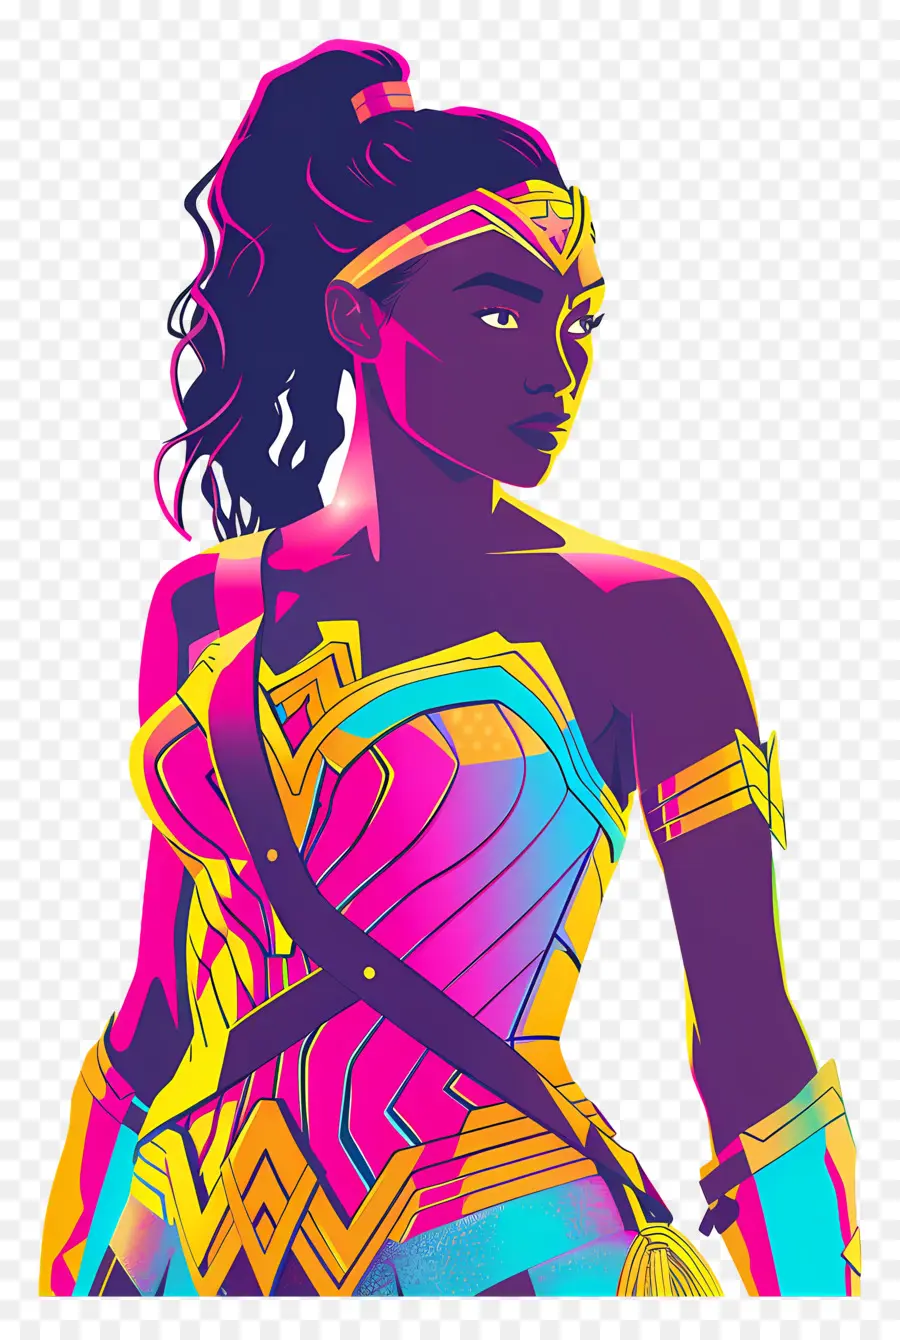 Nubia Wonder Woman Woman Kleid Perücke Überraschung - Lebendige, überraschte Frau in Neonfarben Illustration